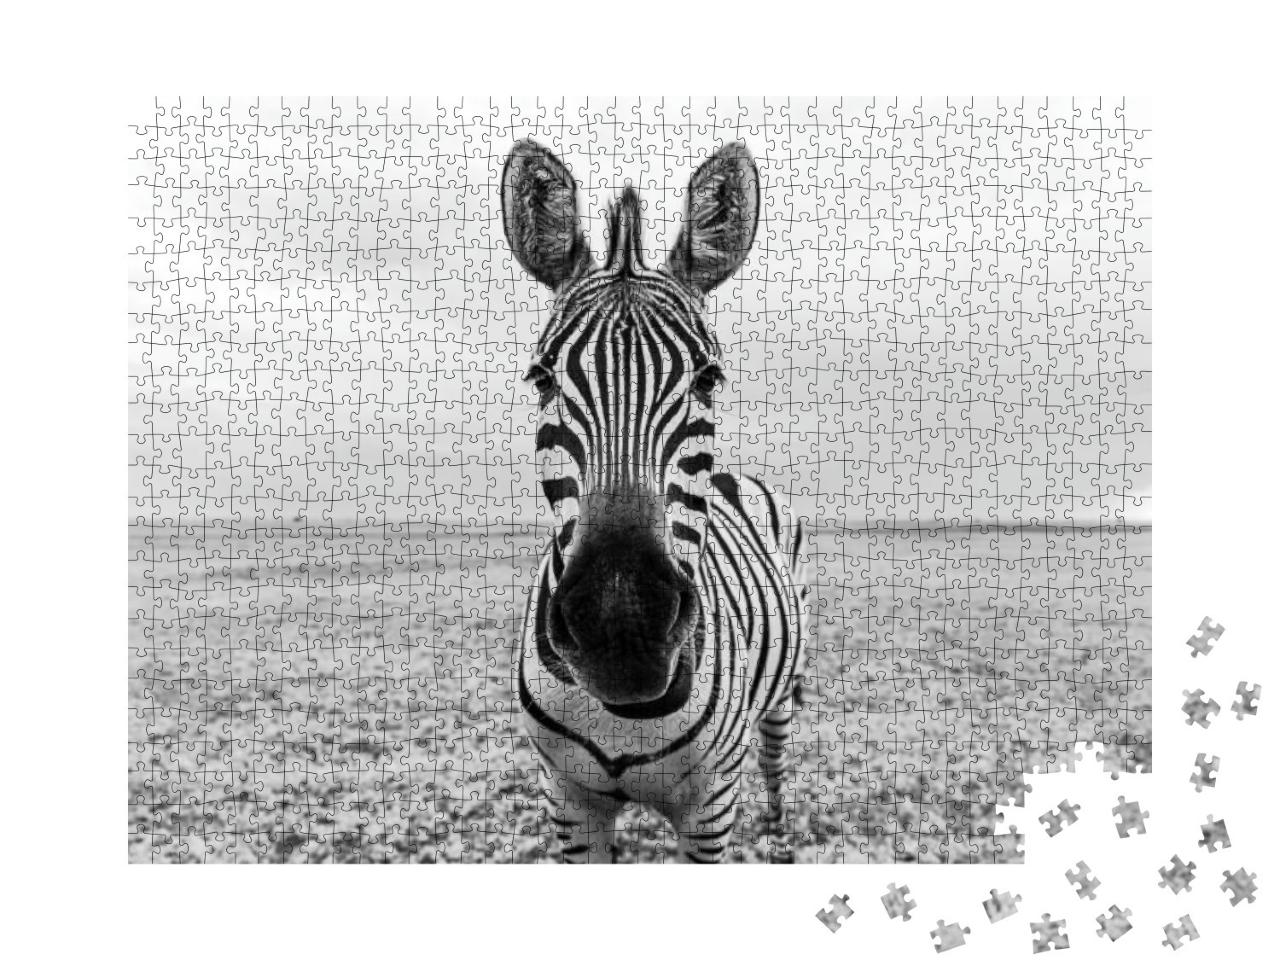 Zebra Black & White Portrait. Unique Wild Animal Looking... Jigsaw Puzzle with 1000 pieces